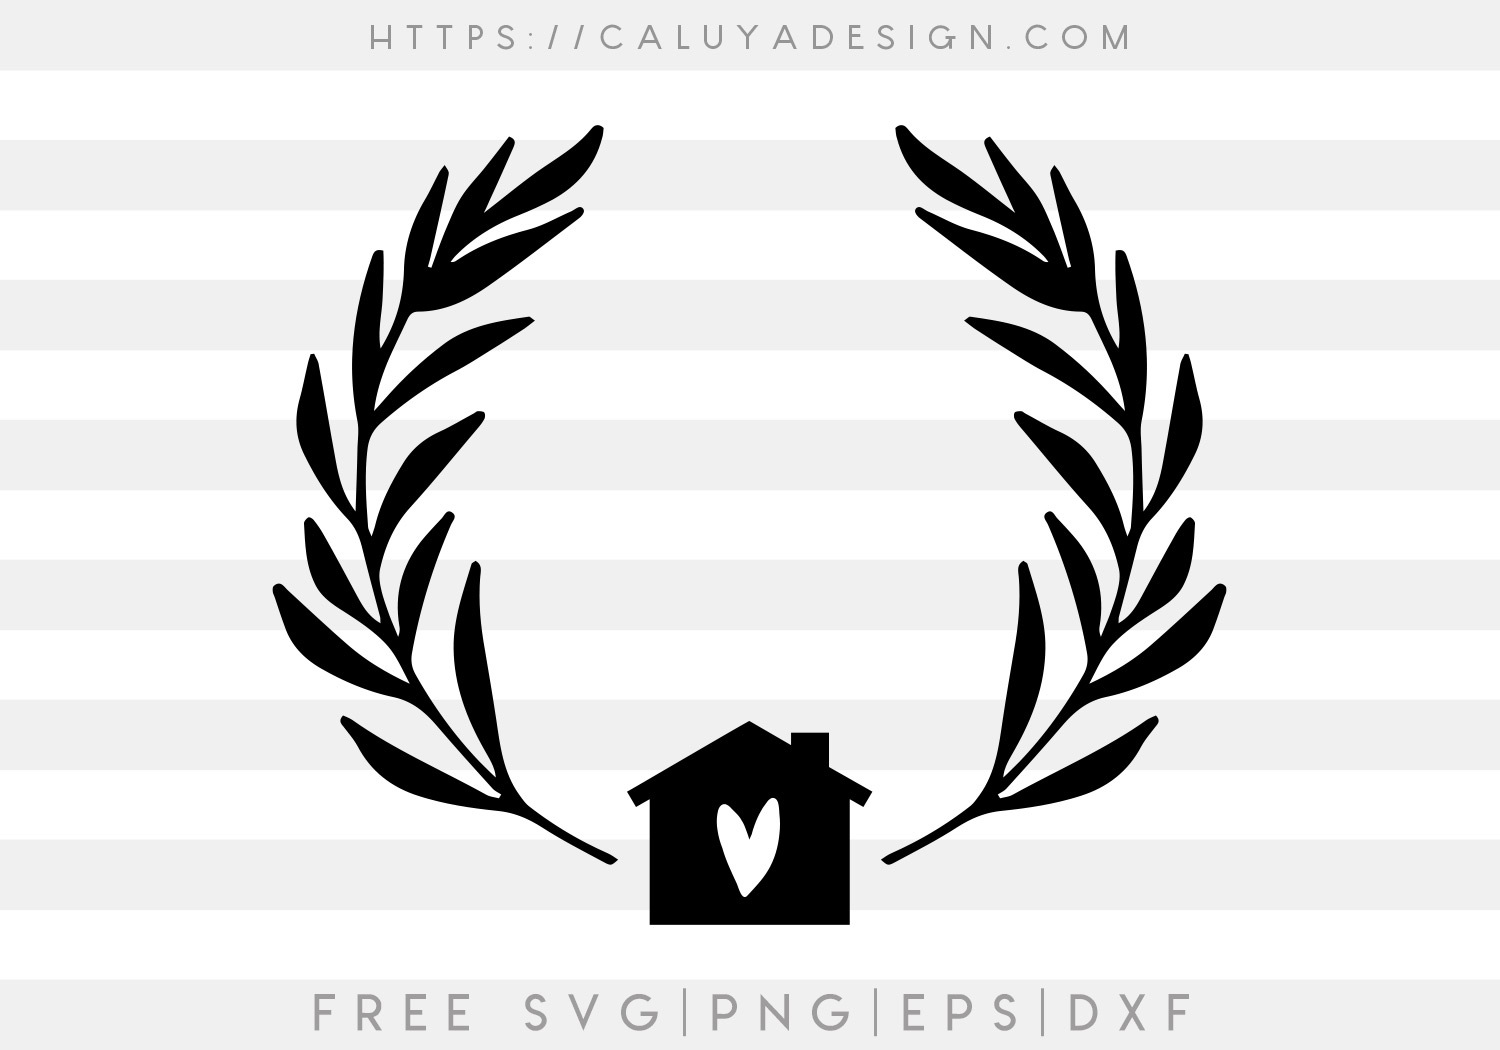 Free Home Monogram SVG Cut File